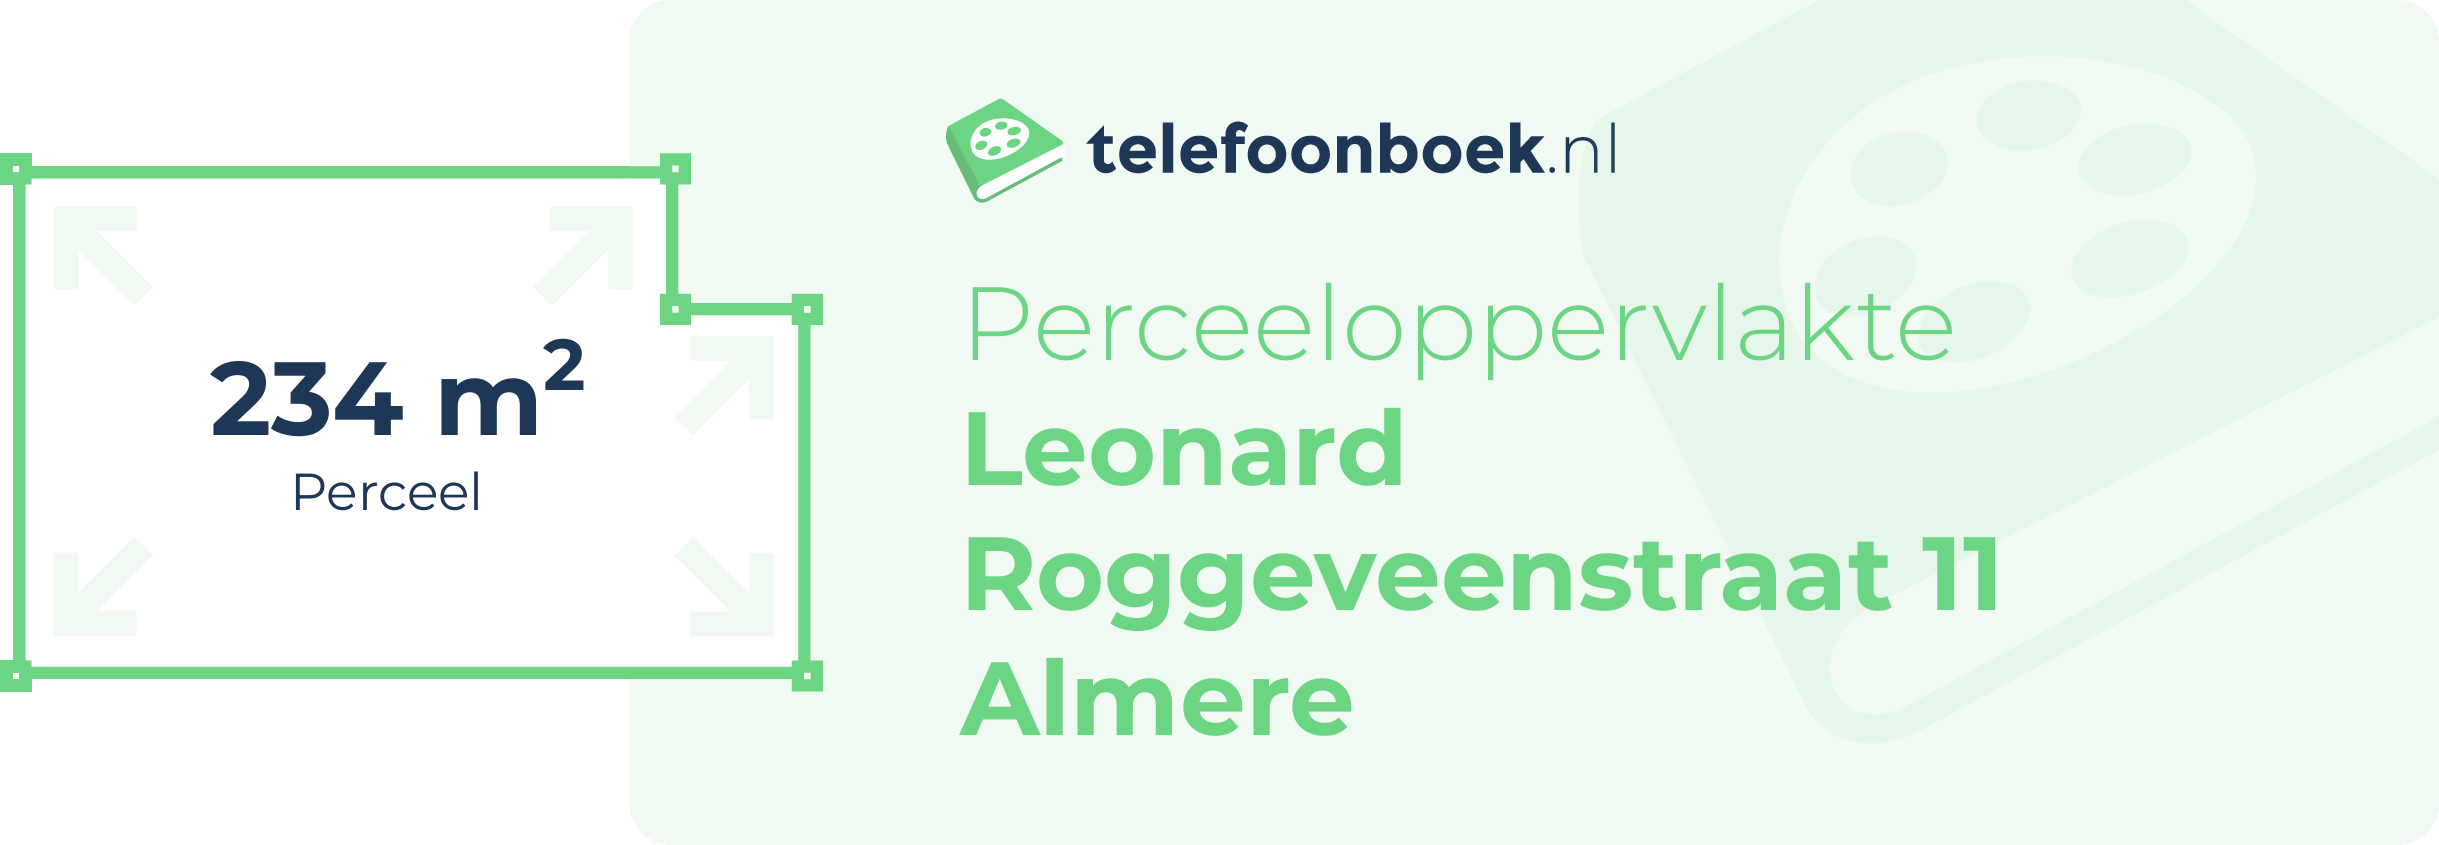 Perceeloppervlakte Leonard Roggeveenstraat 11 Almere